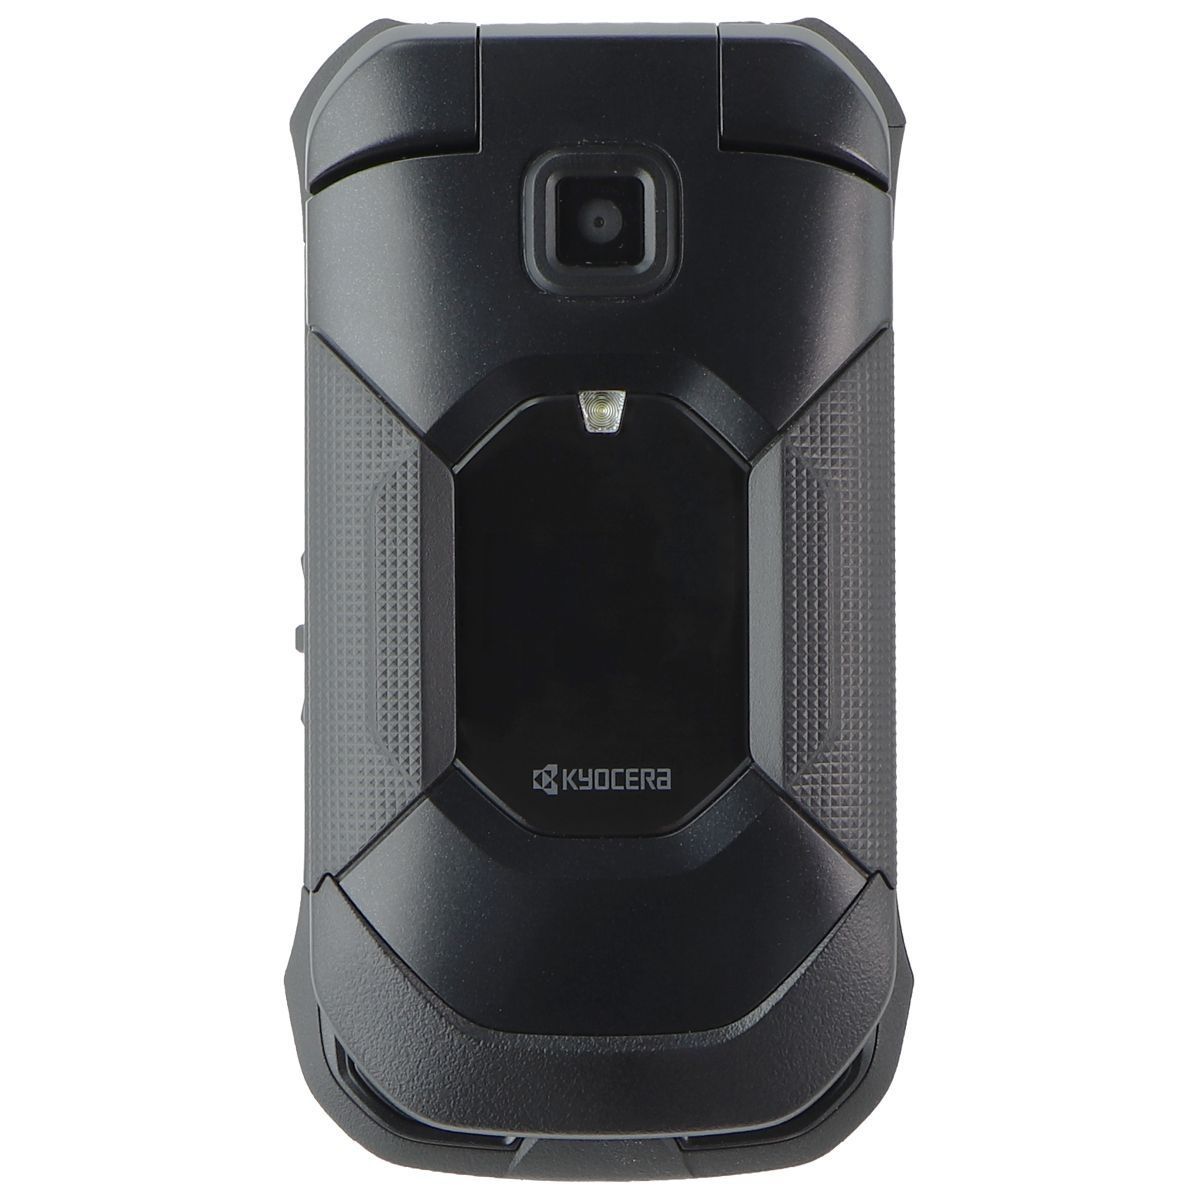 Kyocera DuraXA Equip (2.6-inch) Flip Phone (E4831) Unlocked - 16GB/Black Cell Phones & Smartphones Kyocera    - Simple Cell Bulk Wholesale Pricing - USA Seller